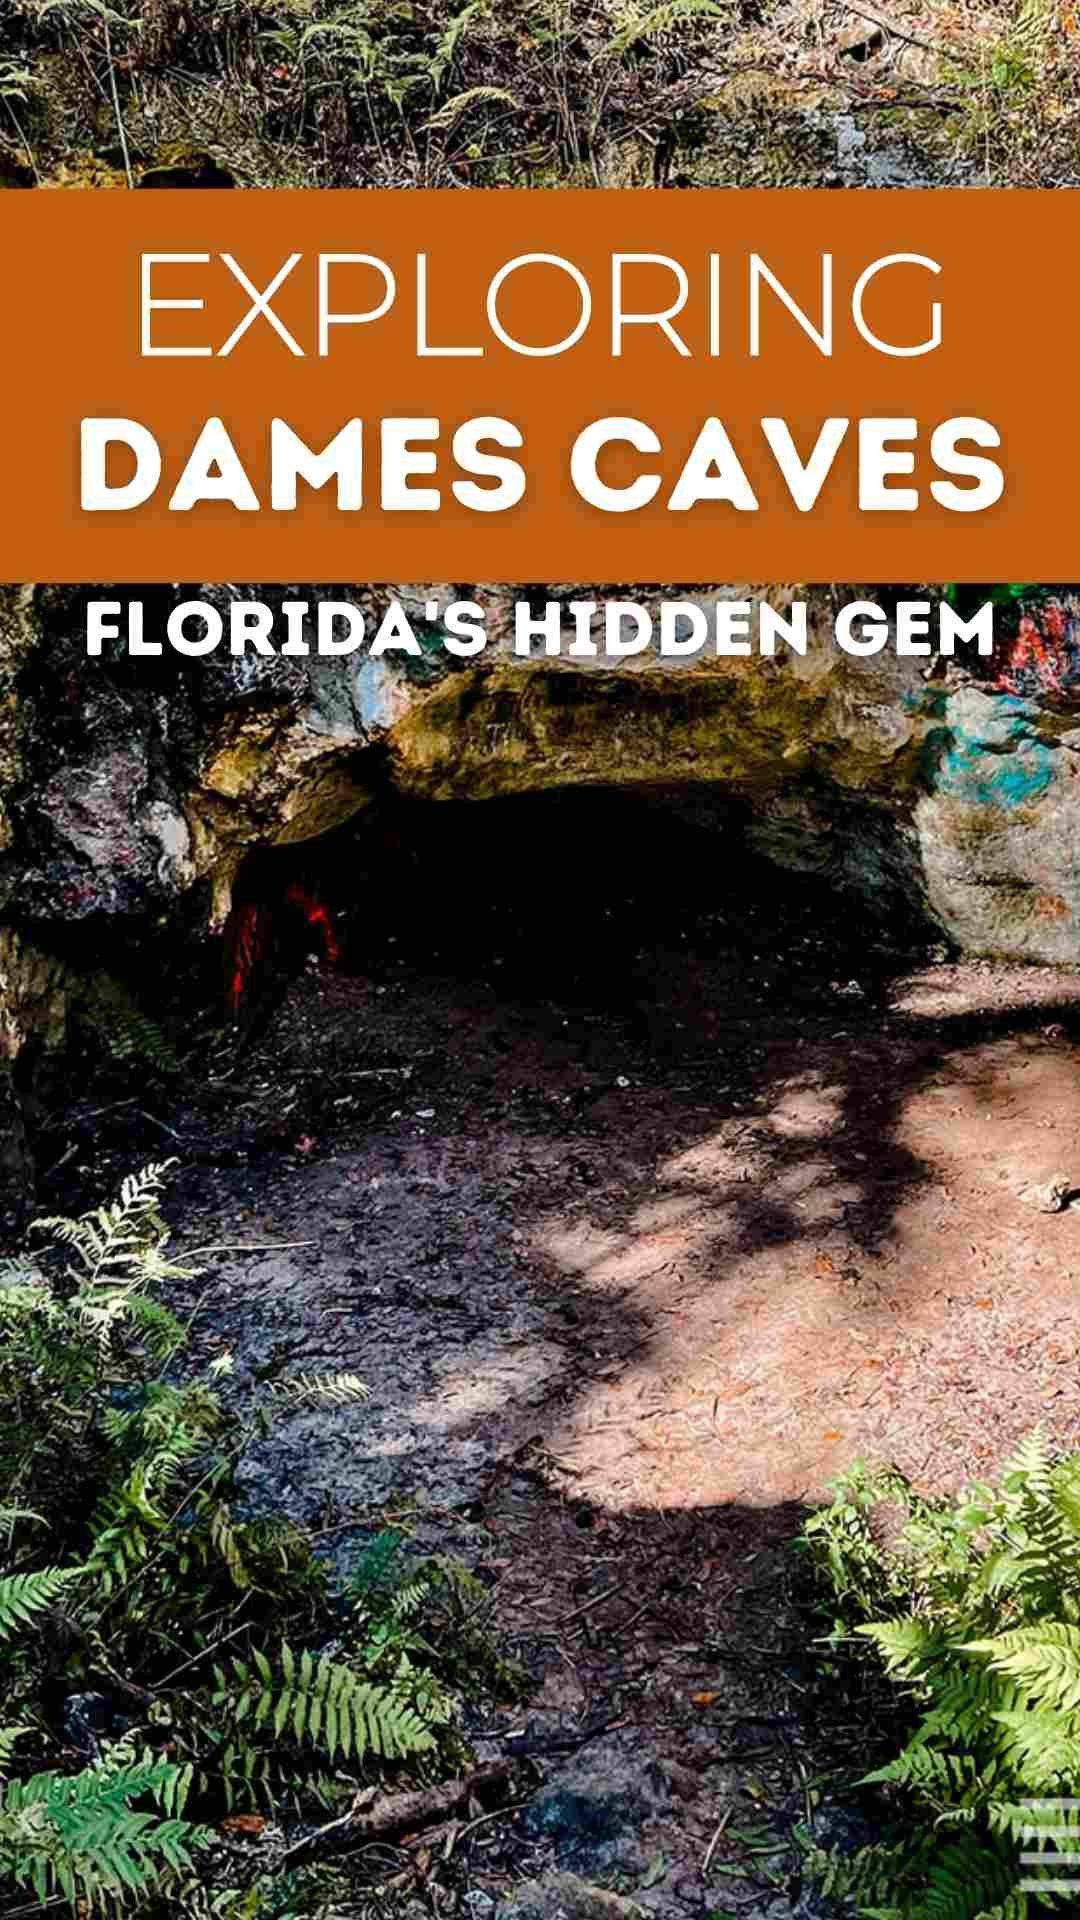 Let's Explore This Hidden Gem Called Dames Caves In FL